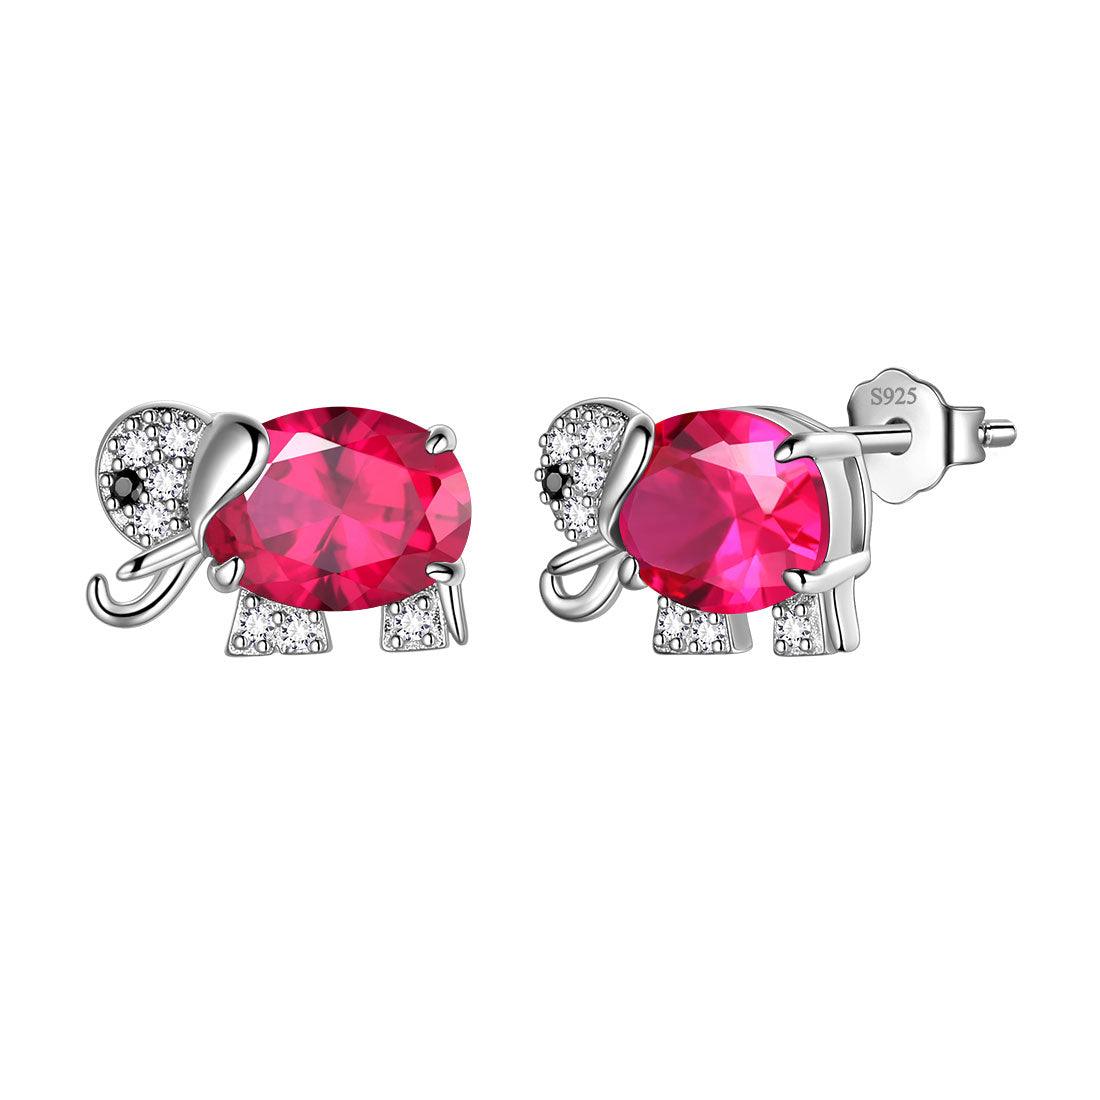 Elephant Necklace Earrings Ring Jewelry July Ruby Birthstone - Rings - Aurora Tears Jewelry